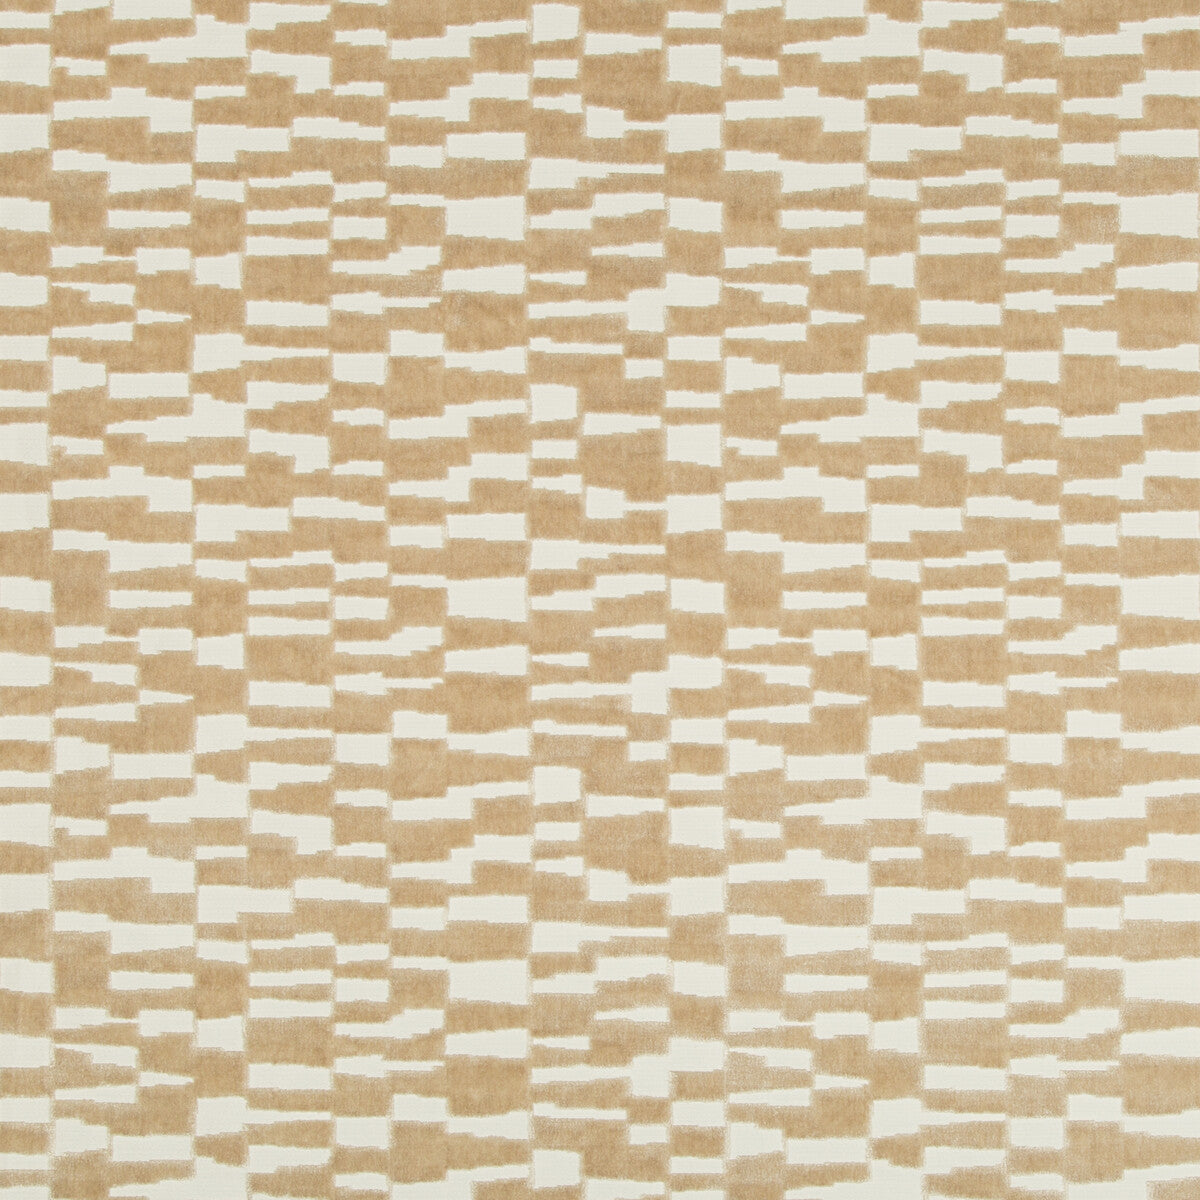 Mod Velvet fabric in camel color - pattern 35544.16.0 - by Kravet Basics in the Bermuda collection